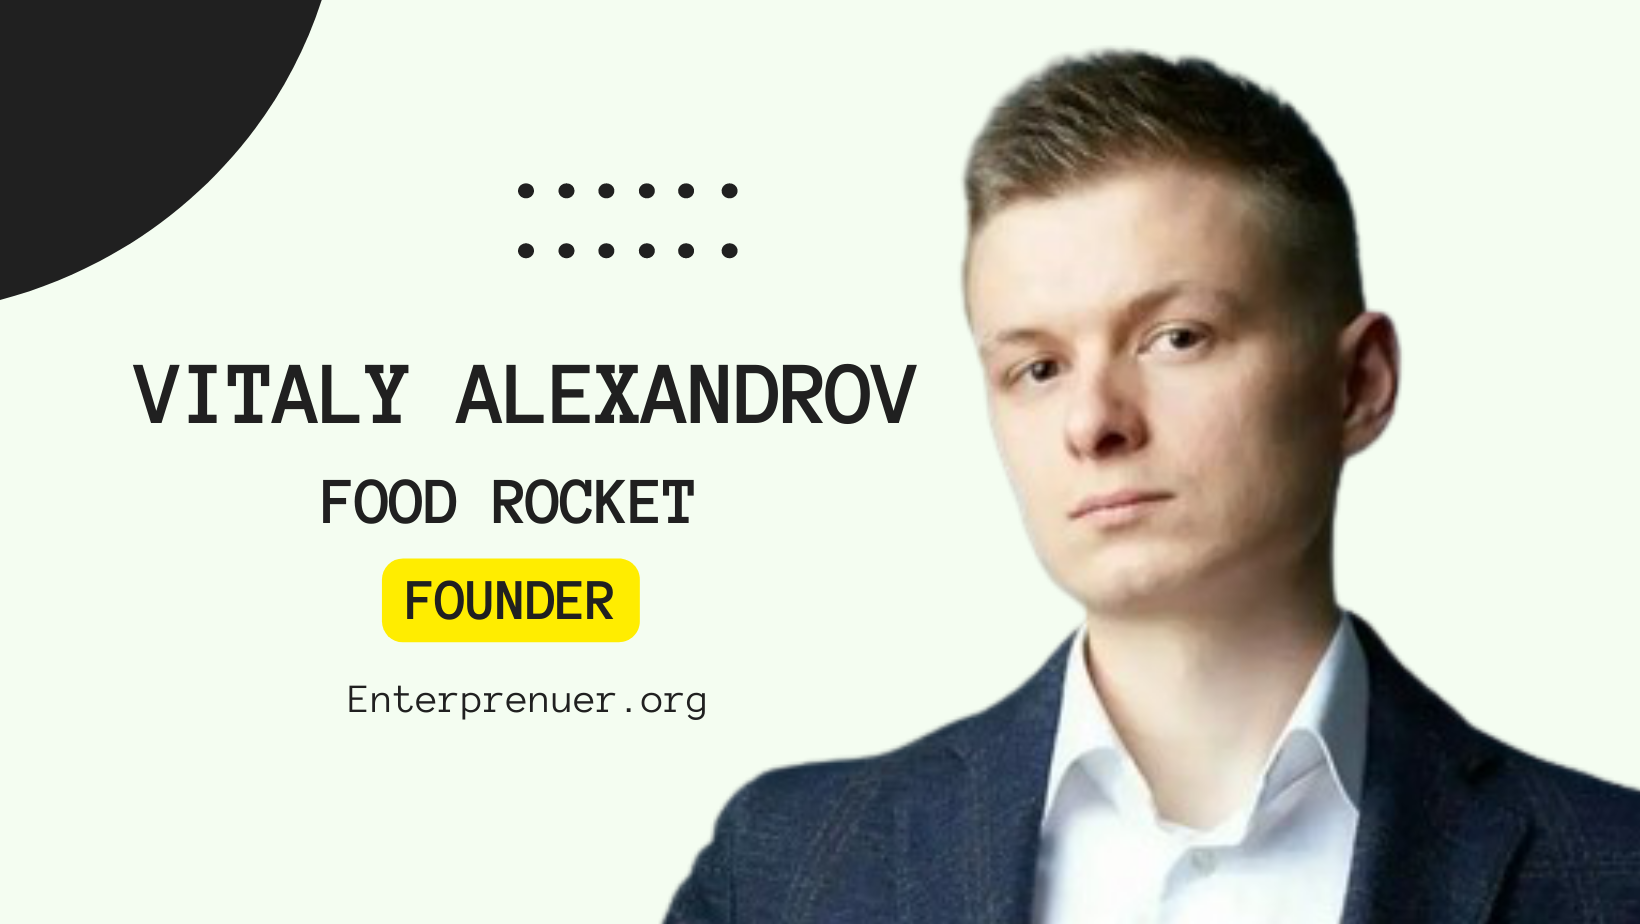 Vitaly Alexandrov Founder of Food Rocket